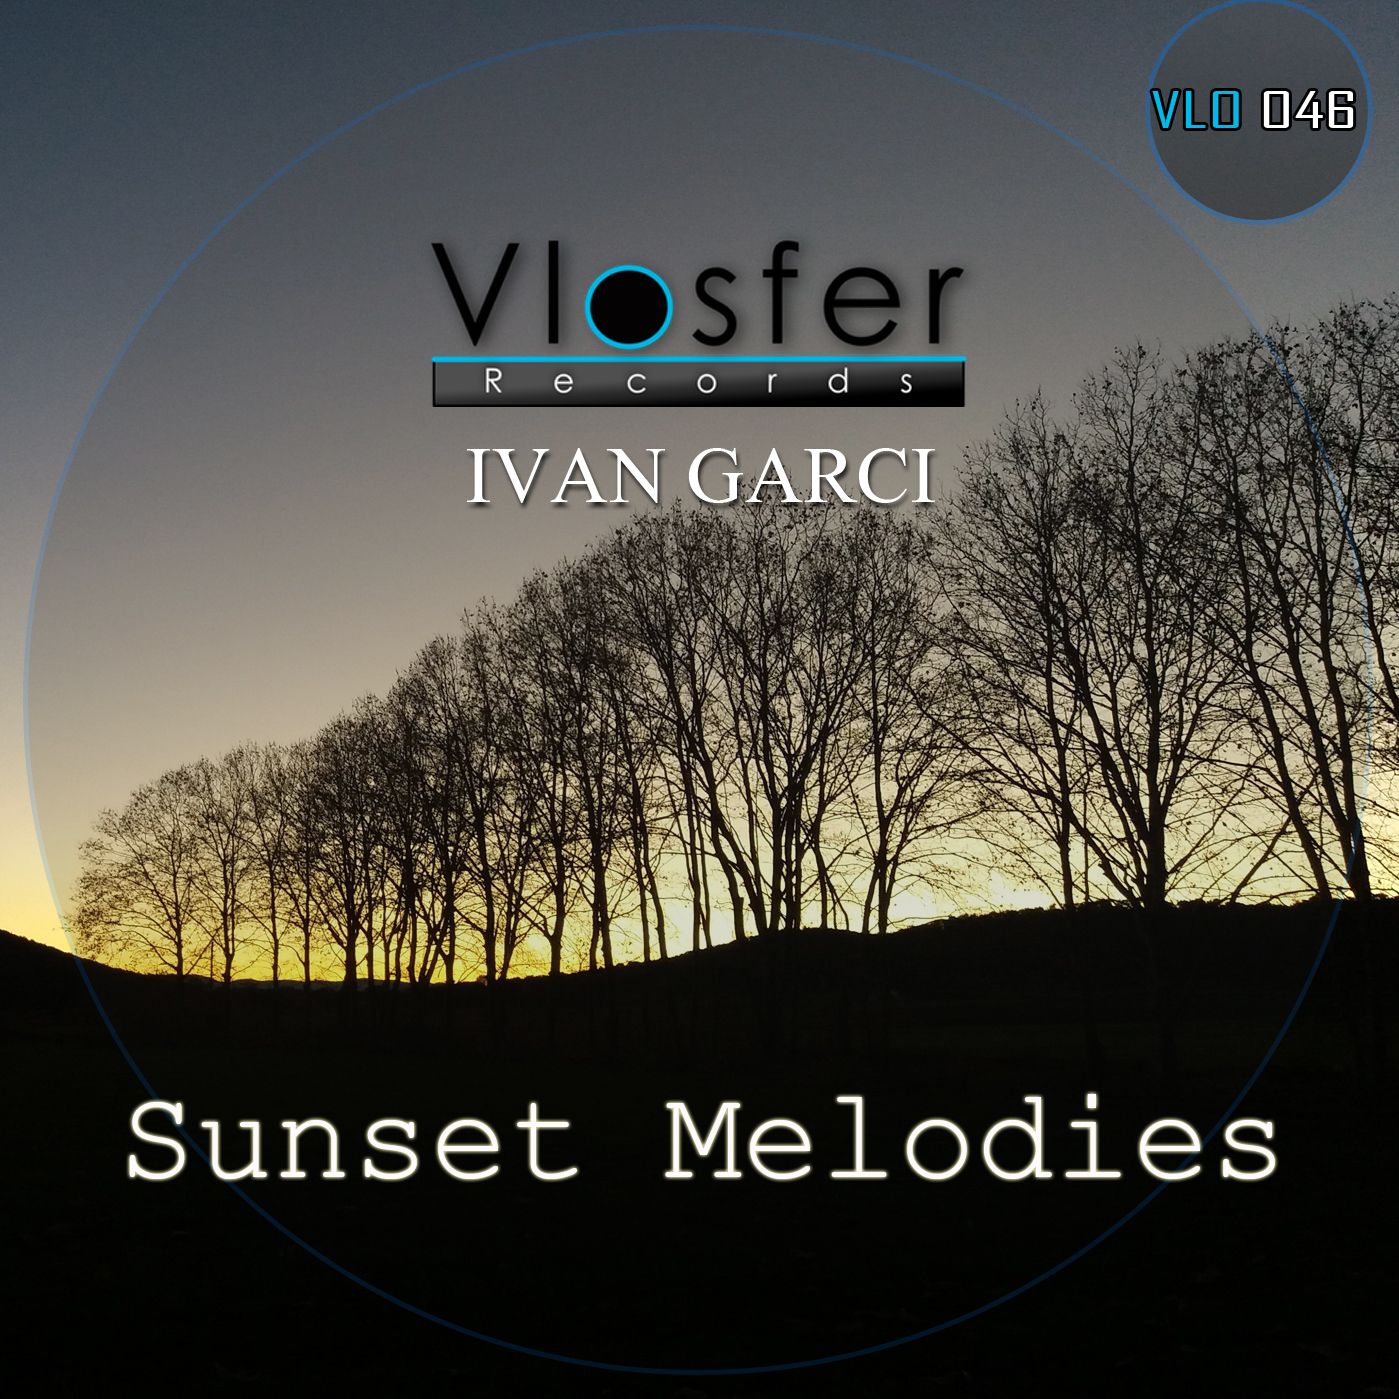 Prenesi Clear - Ivan Garci (low quality sound) Vlosfer records.